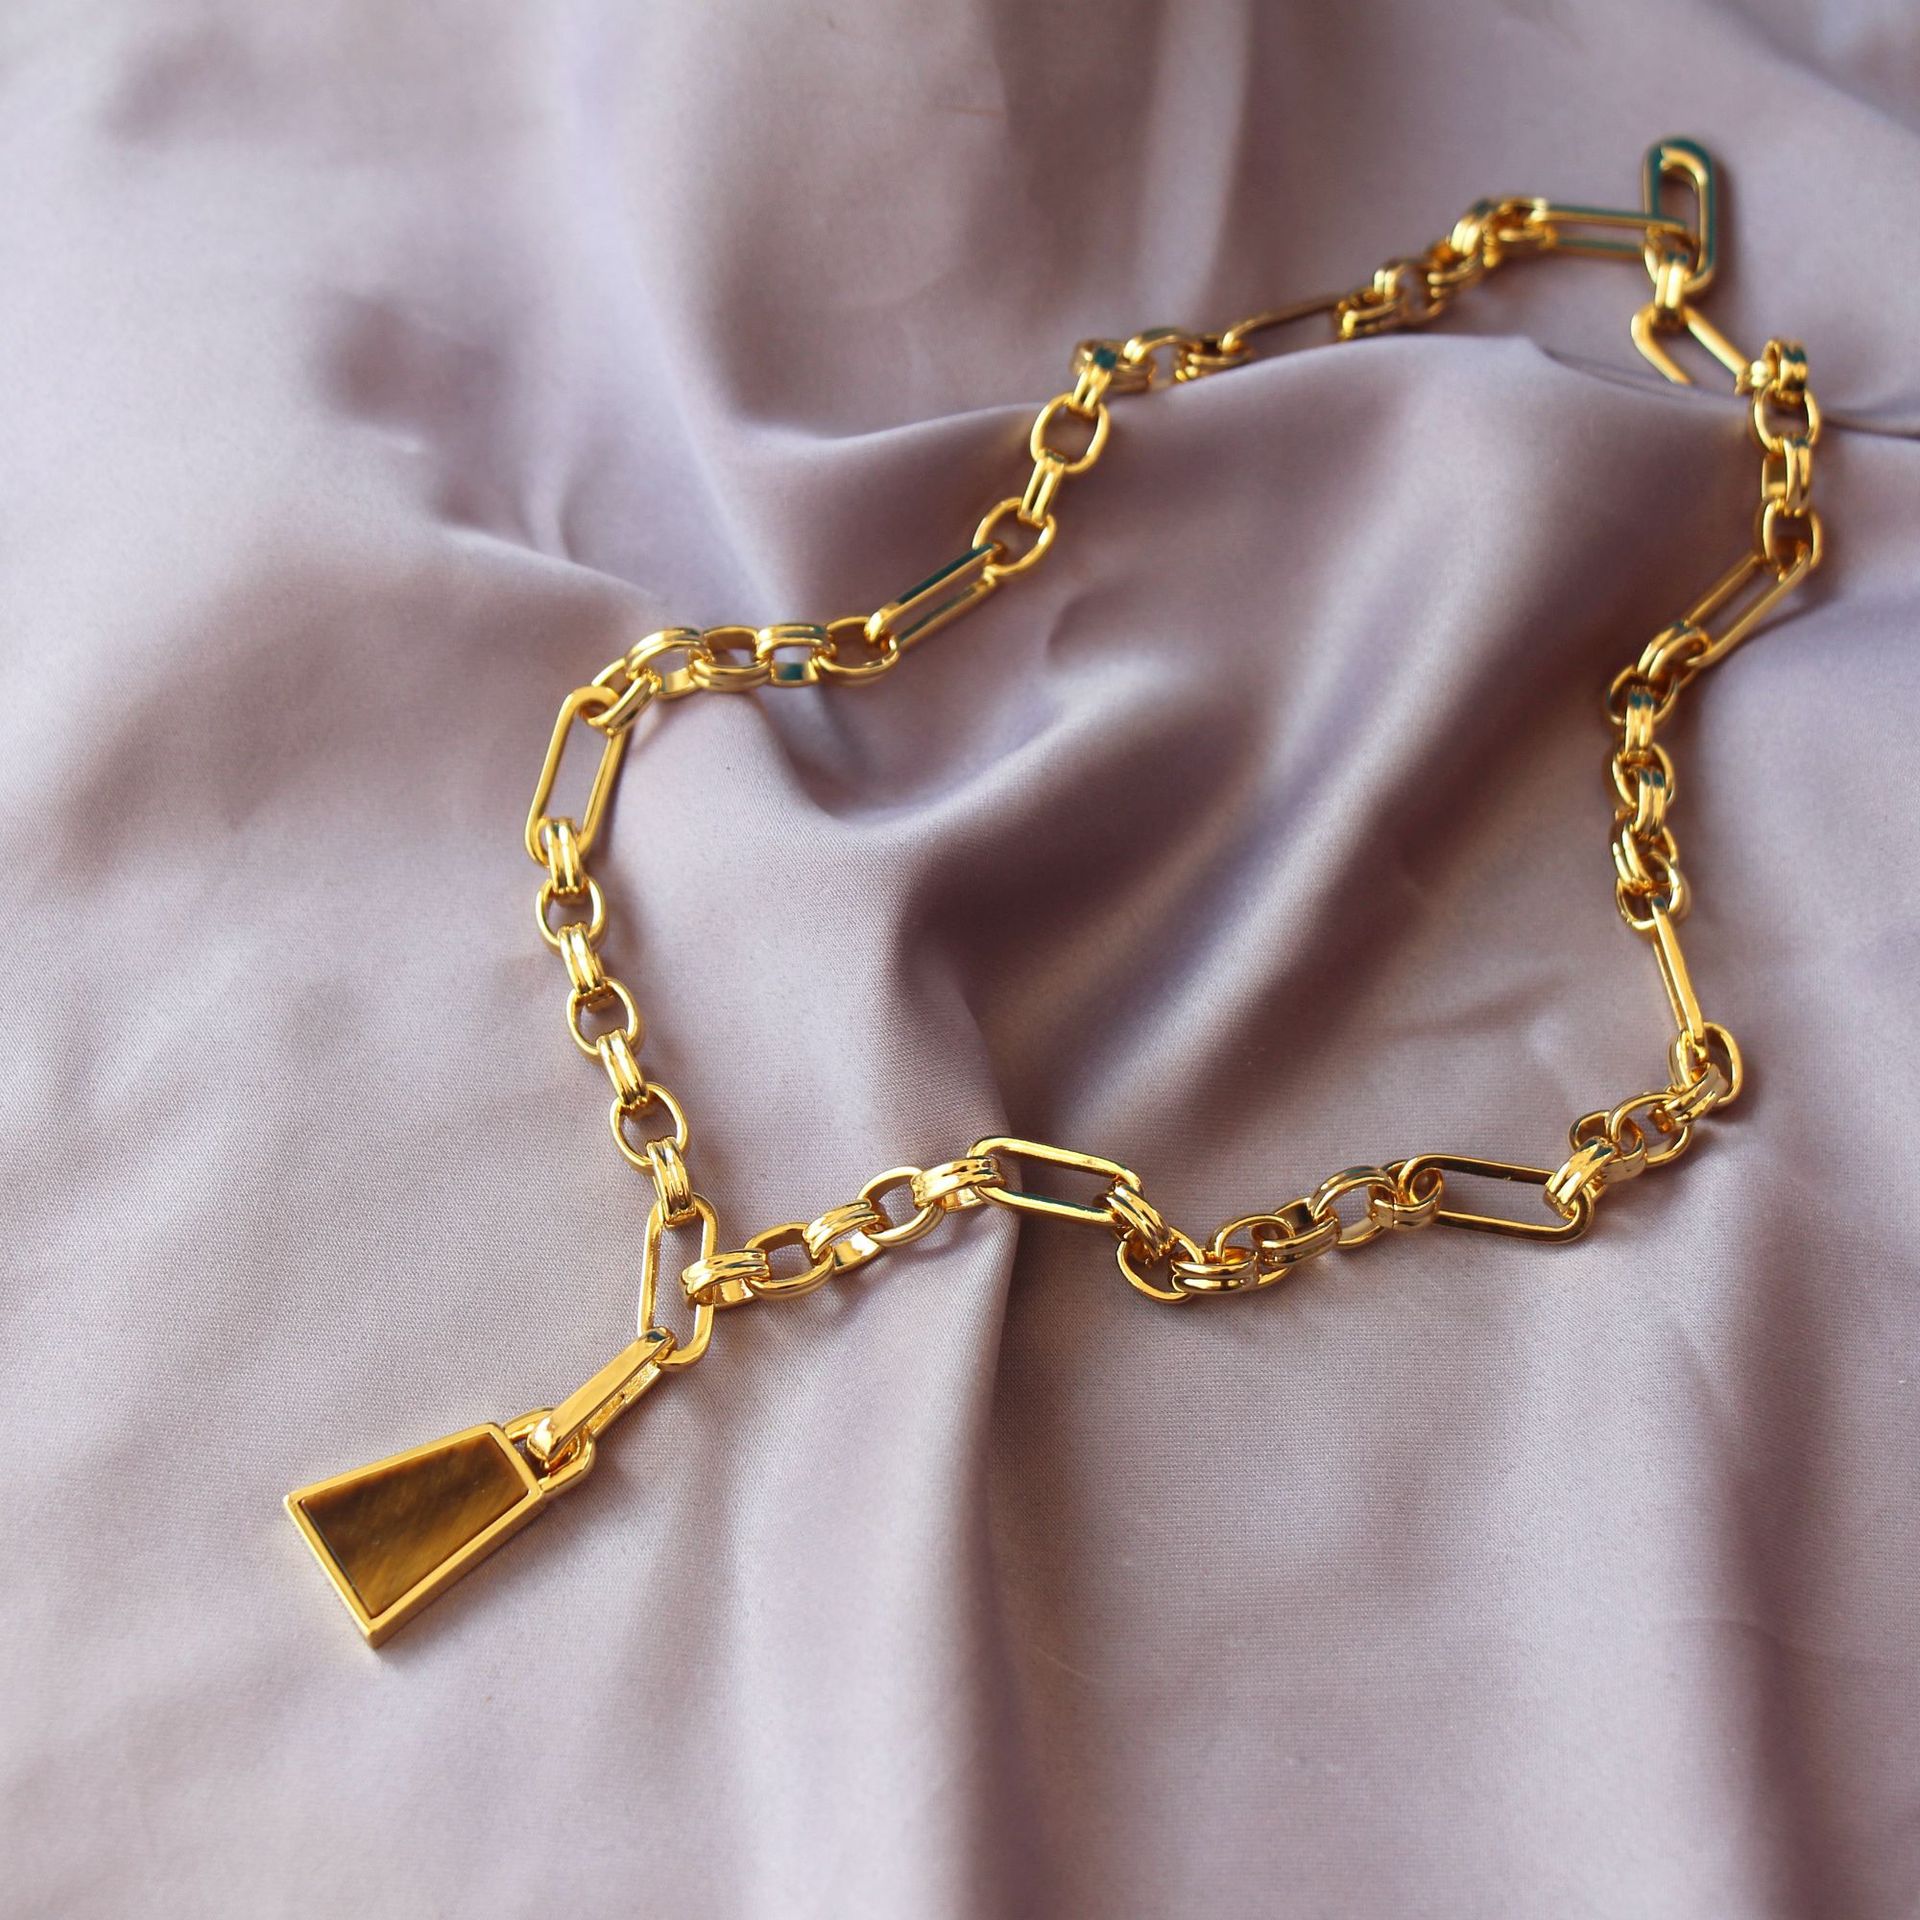 1:pendant   chain